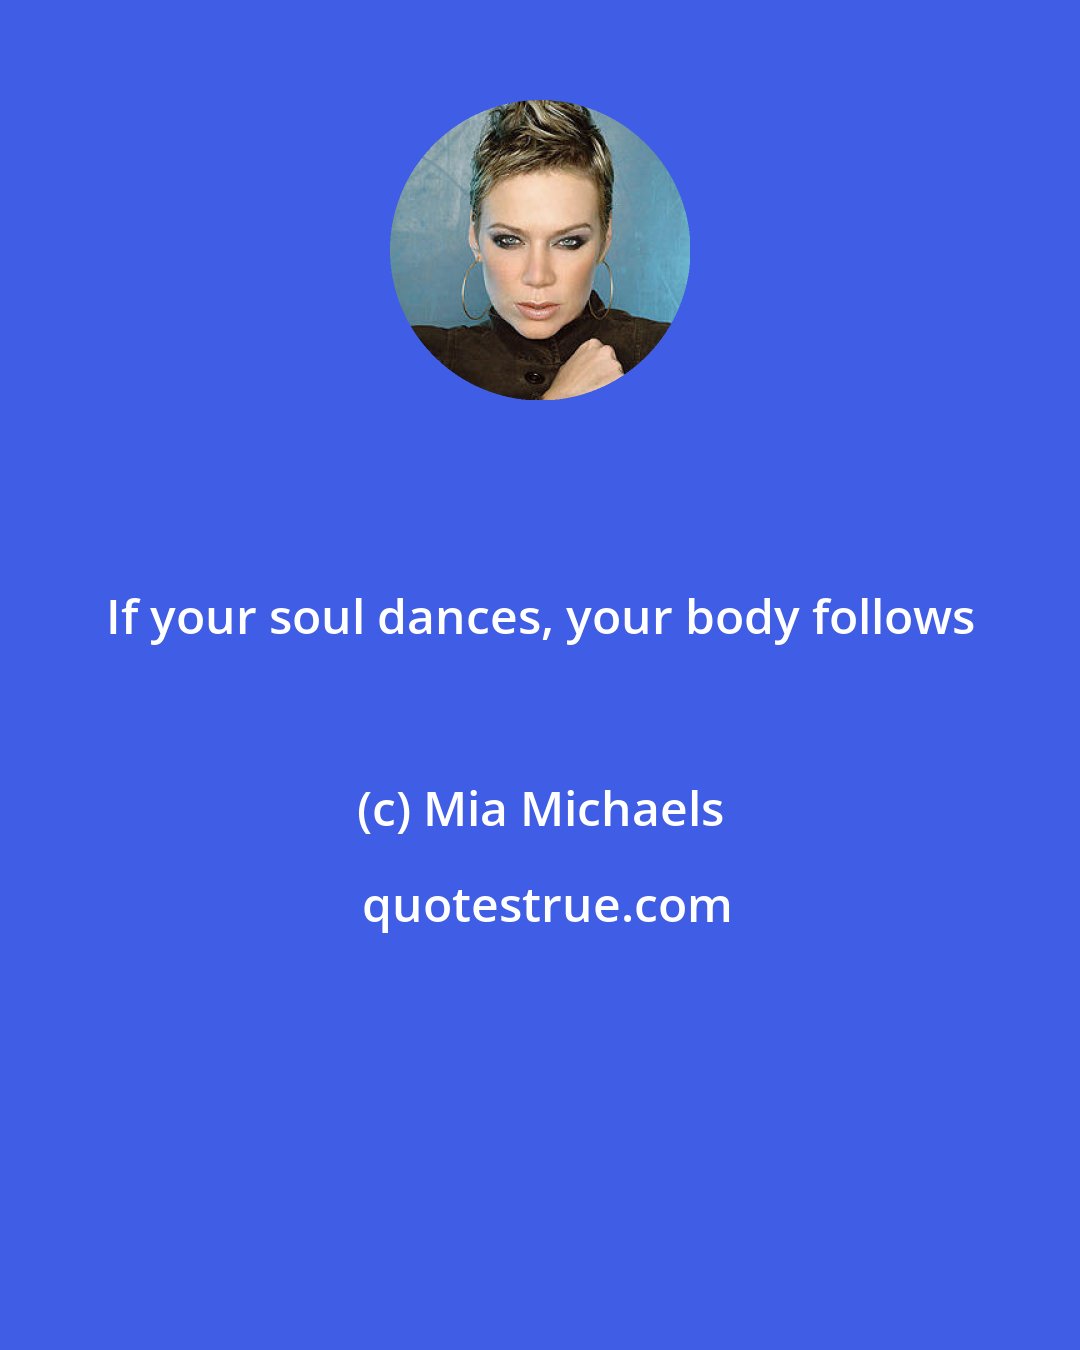 Mia Michaels: If your soul dances, your body follows